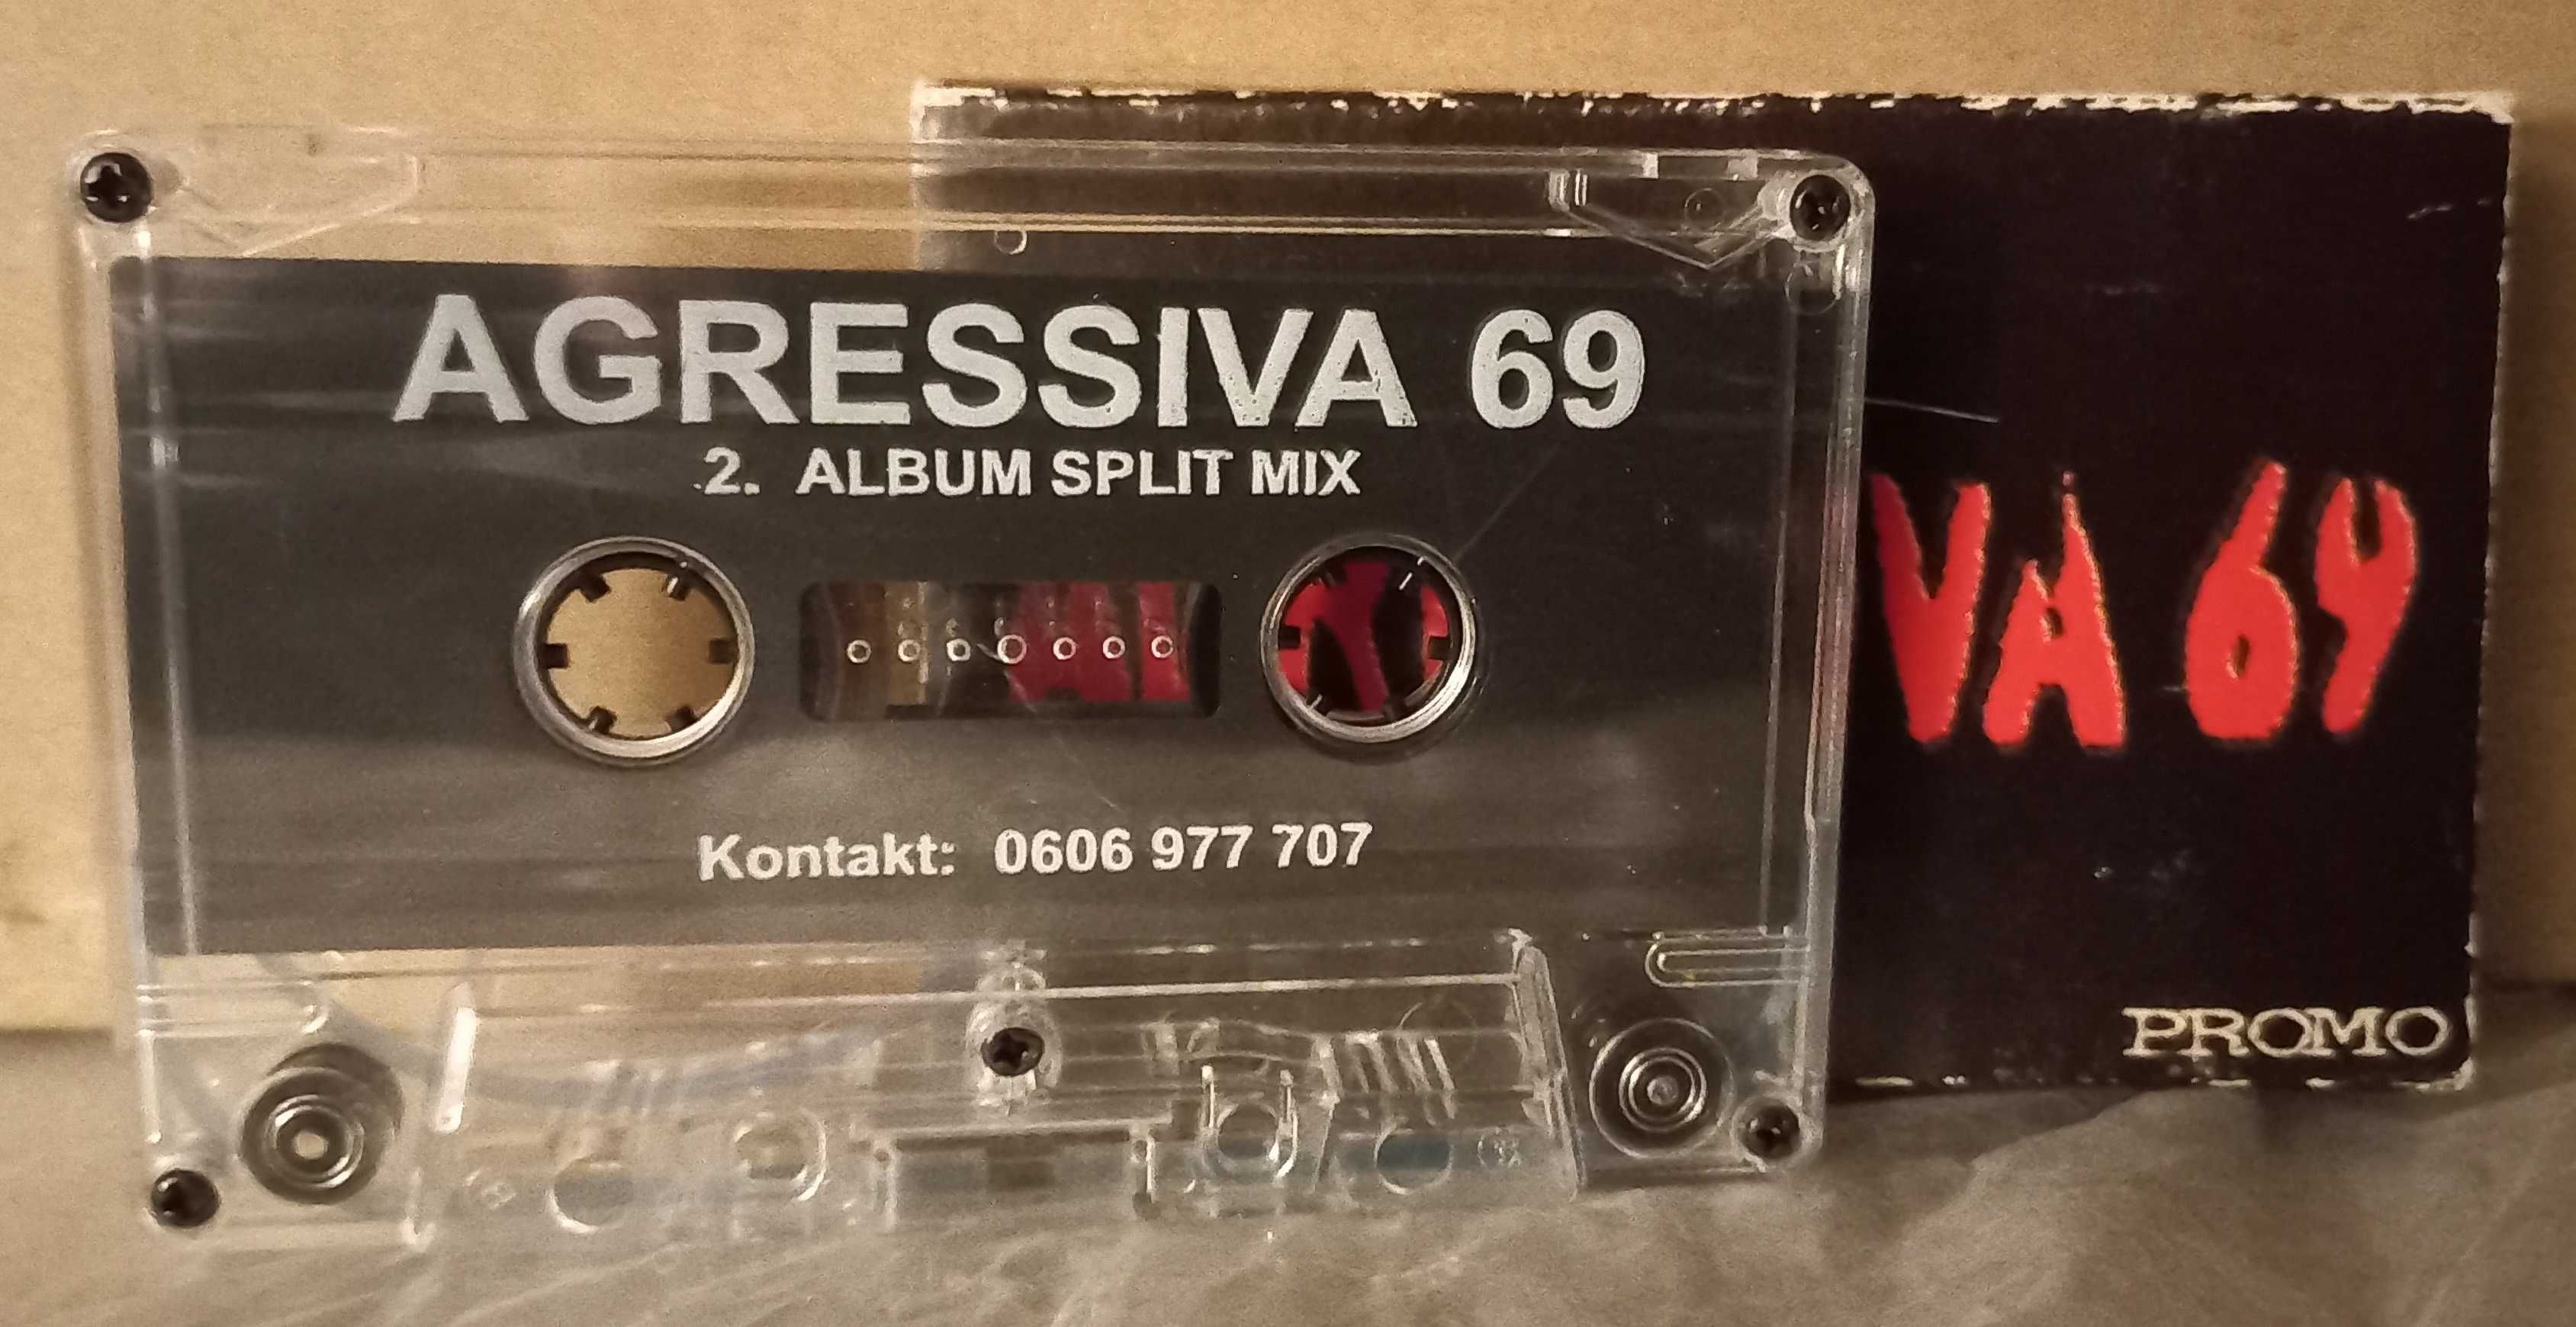 Agressiva 69. Promo. Album Split Mix (Ultra Rec.), Depeche Mode 2001